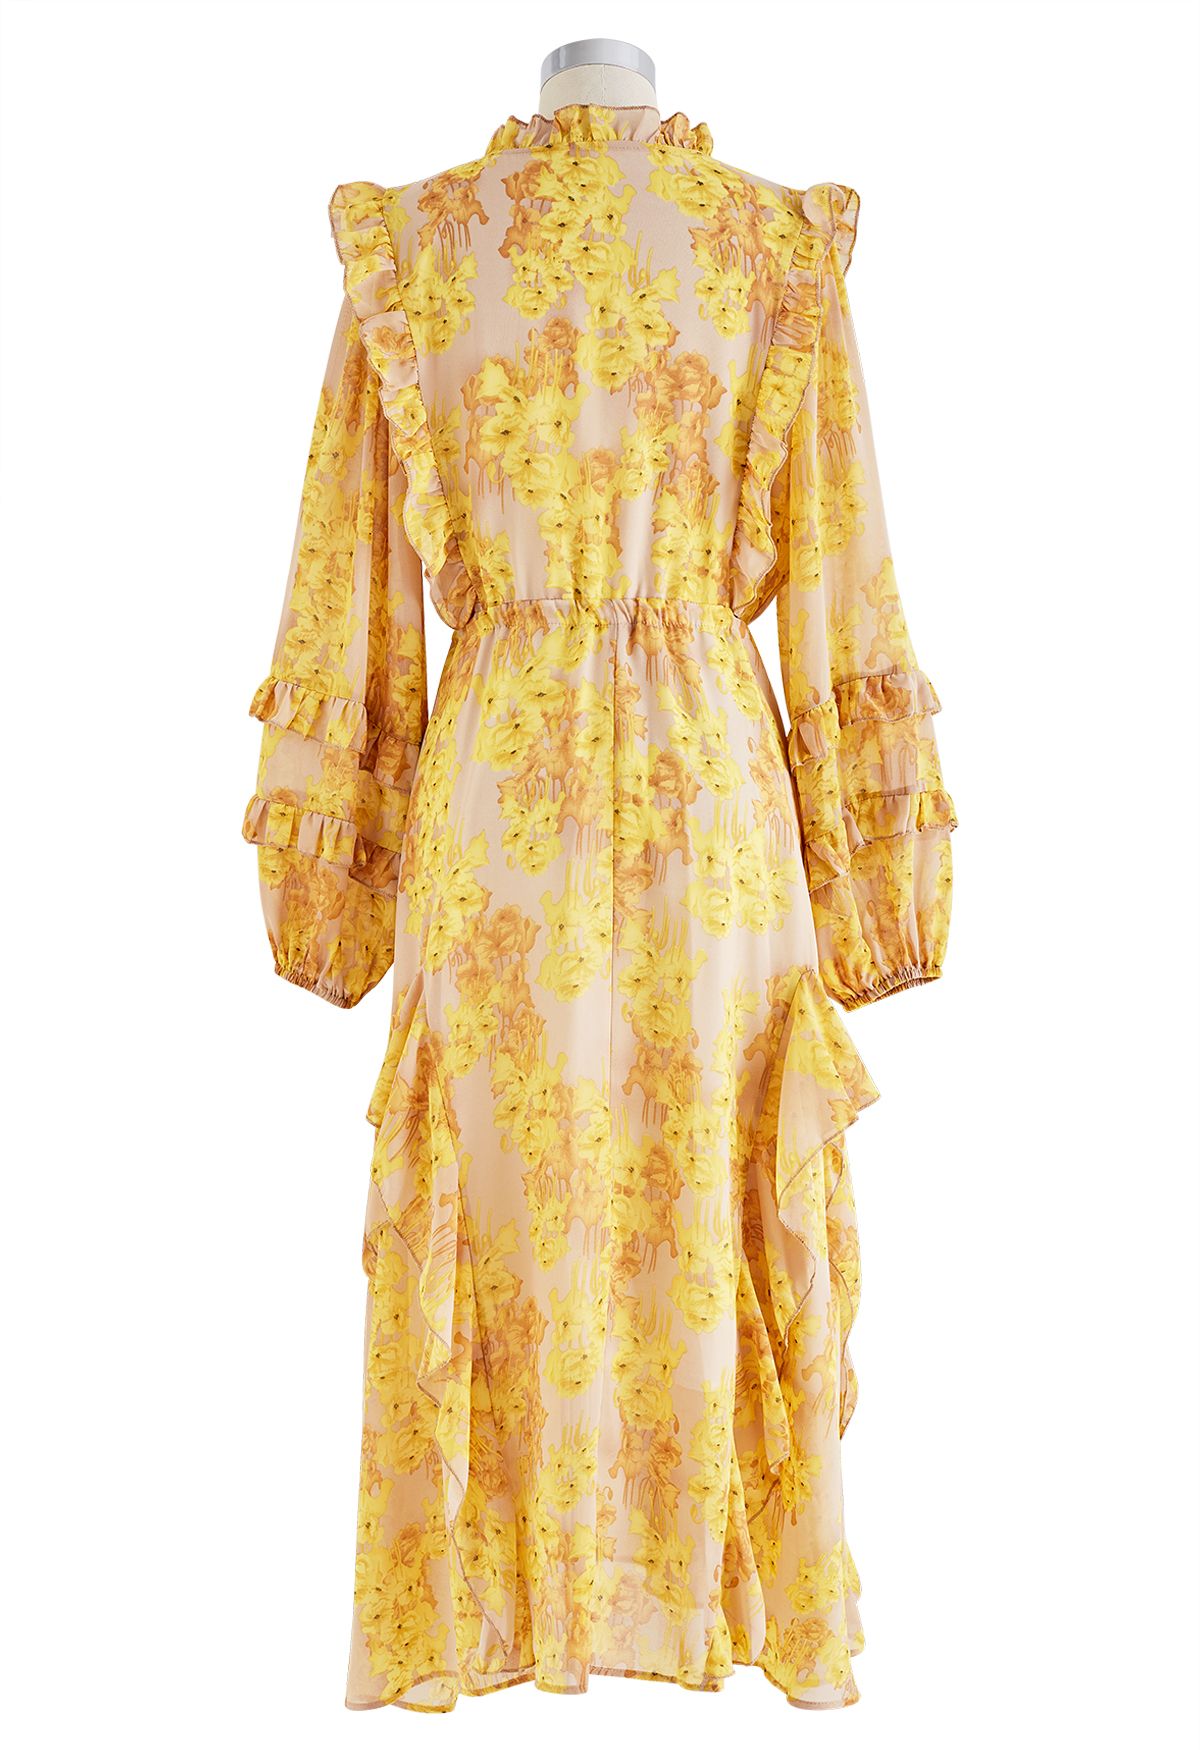 Elegant Floral Ruffle Trim Tie Waist Chiffon Dress in Yellow - Retro ...